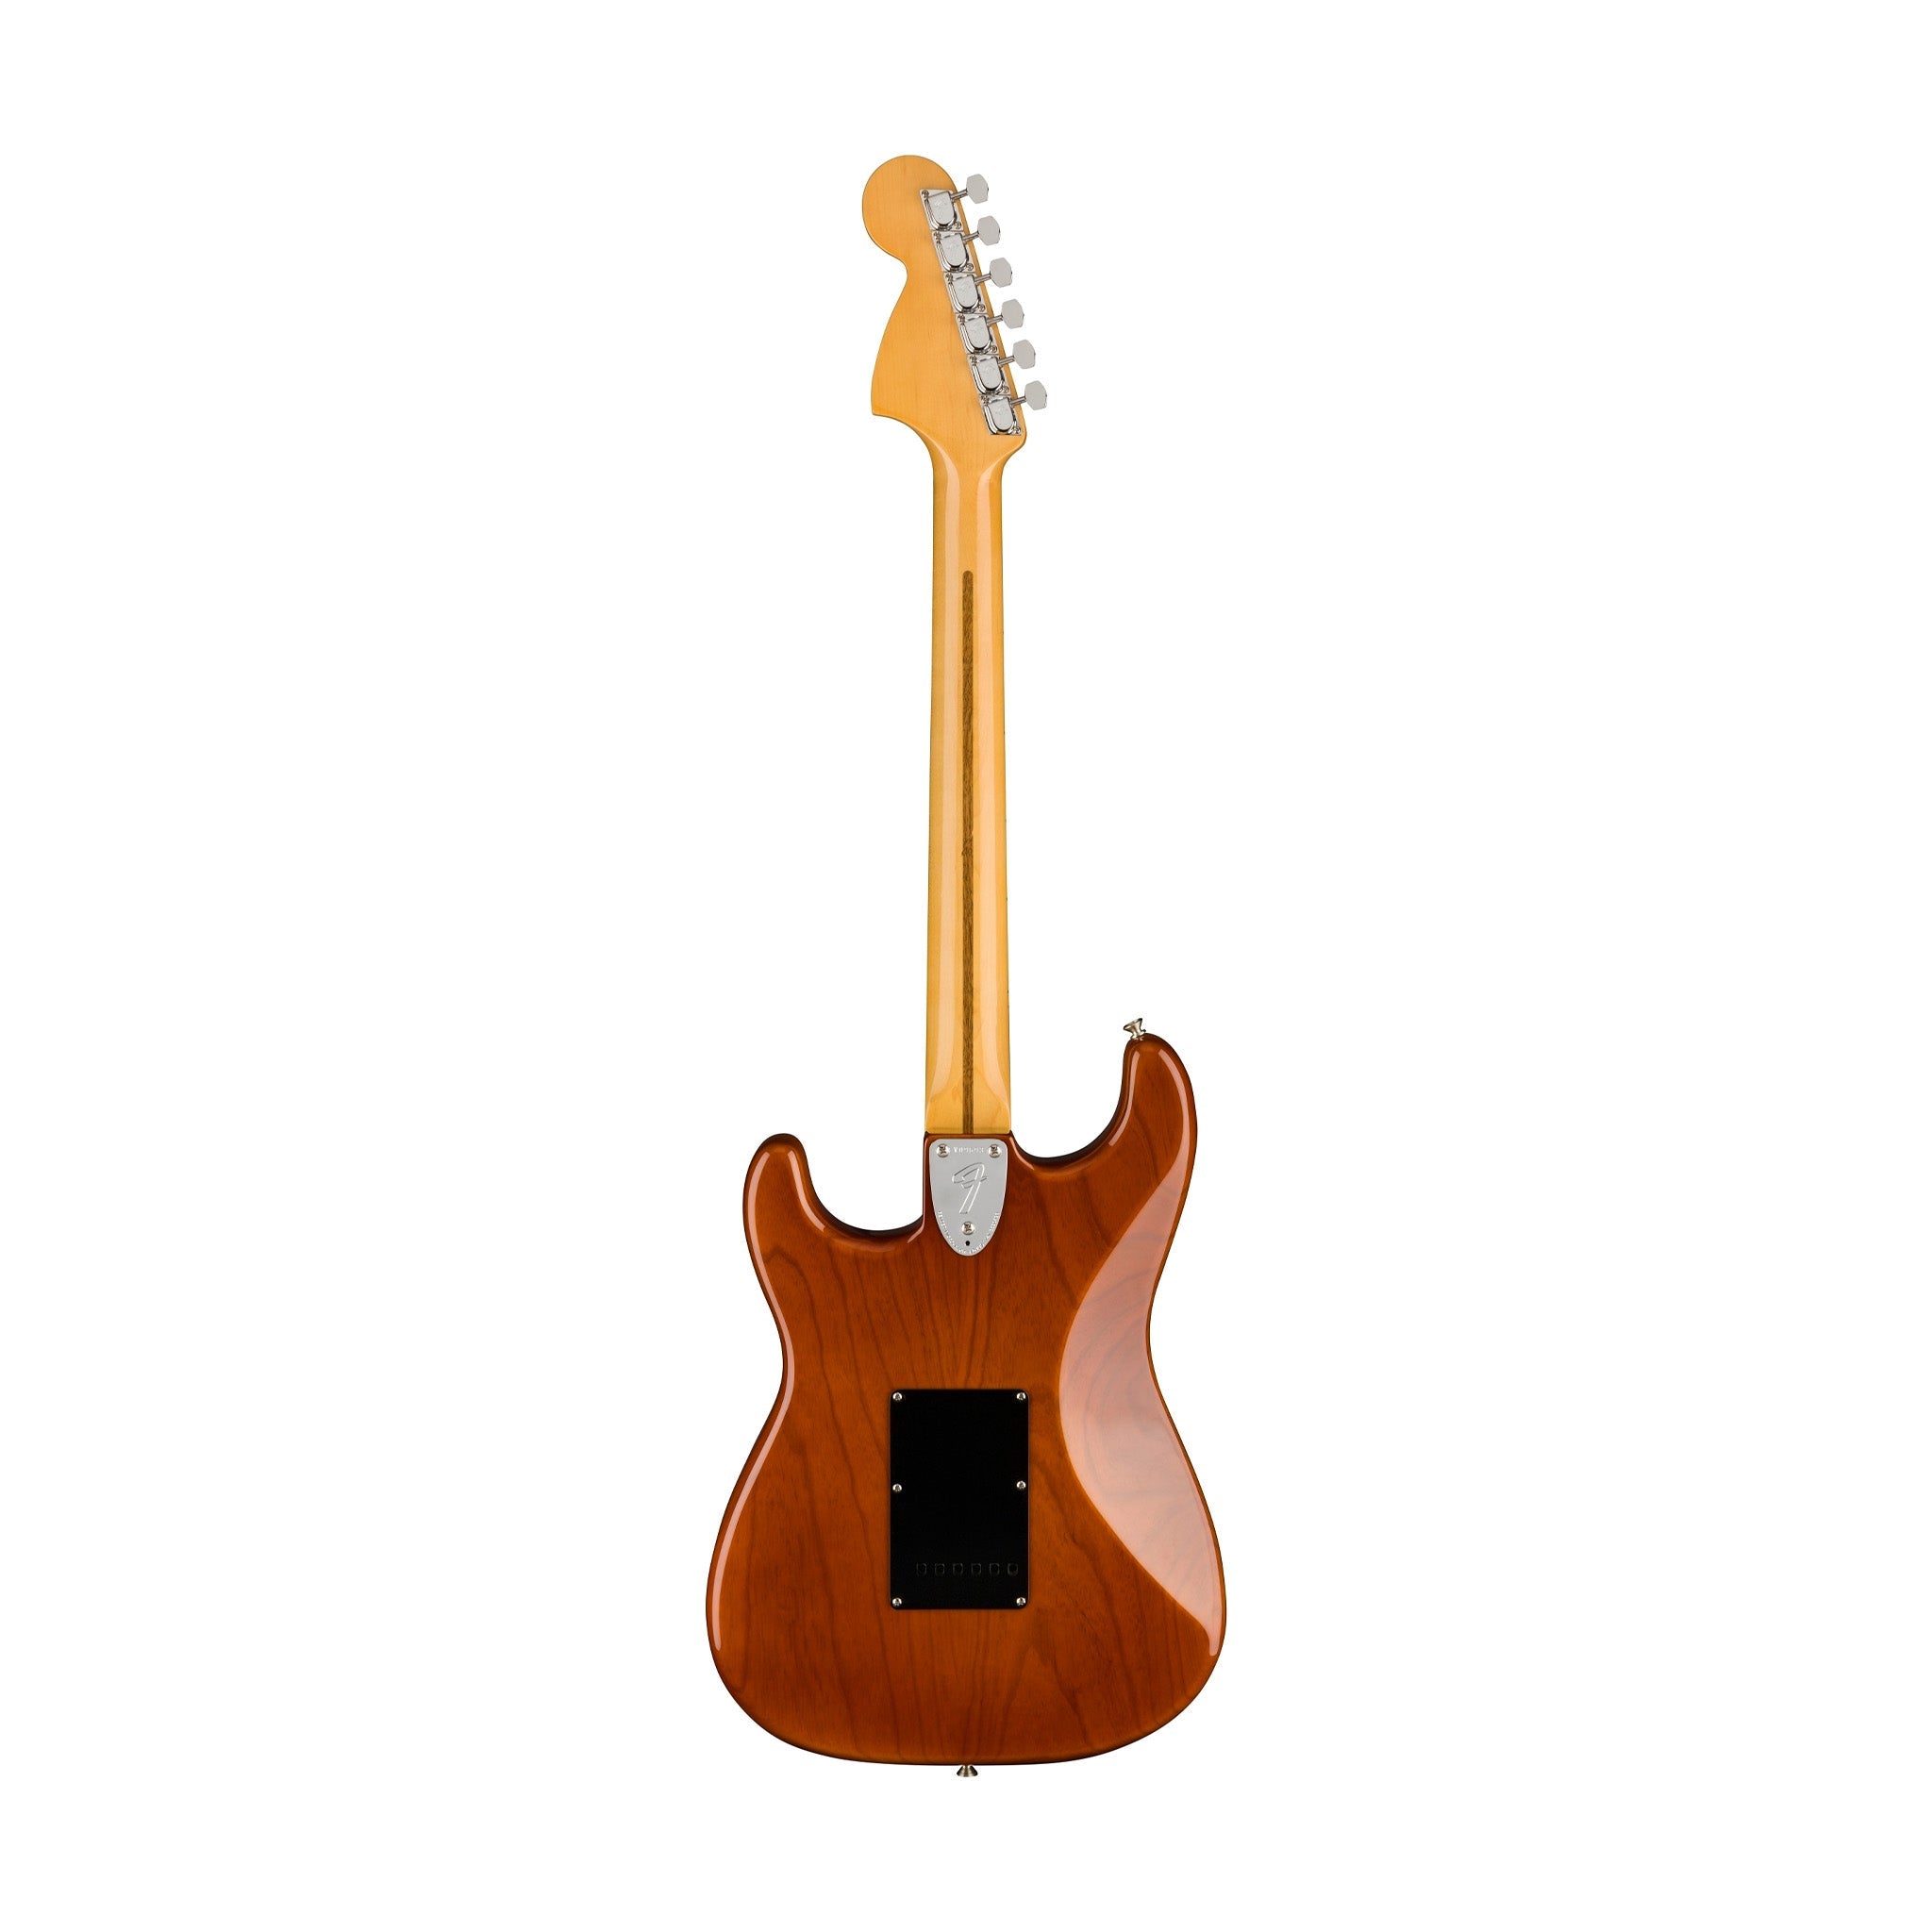 Fender American Vintage II 73 Stratocaster Electric Guitar, Maple FB, Mocha